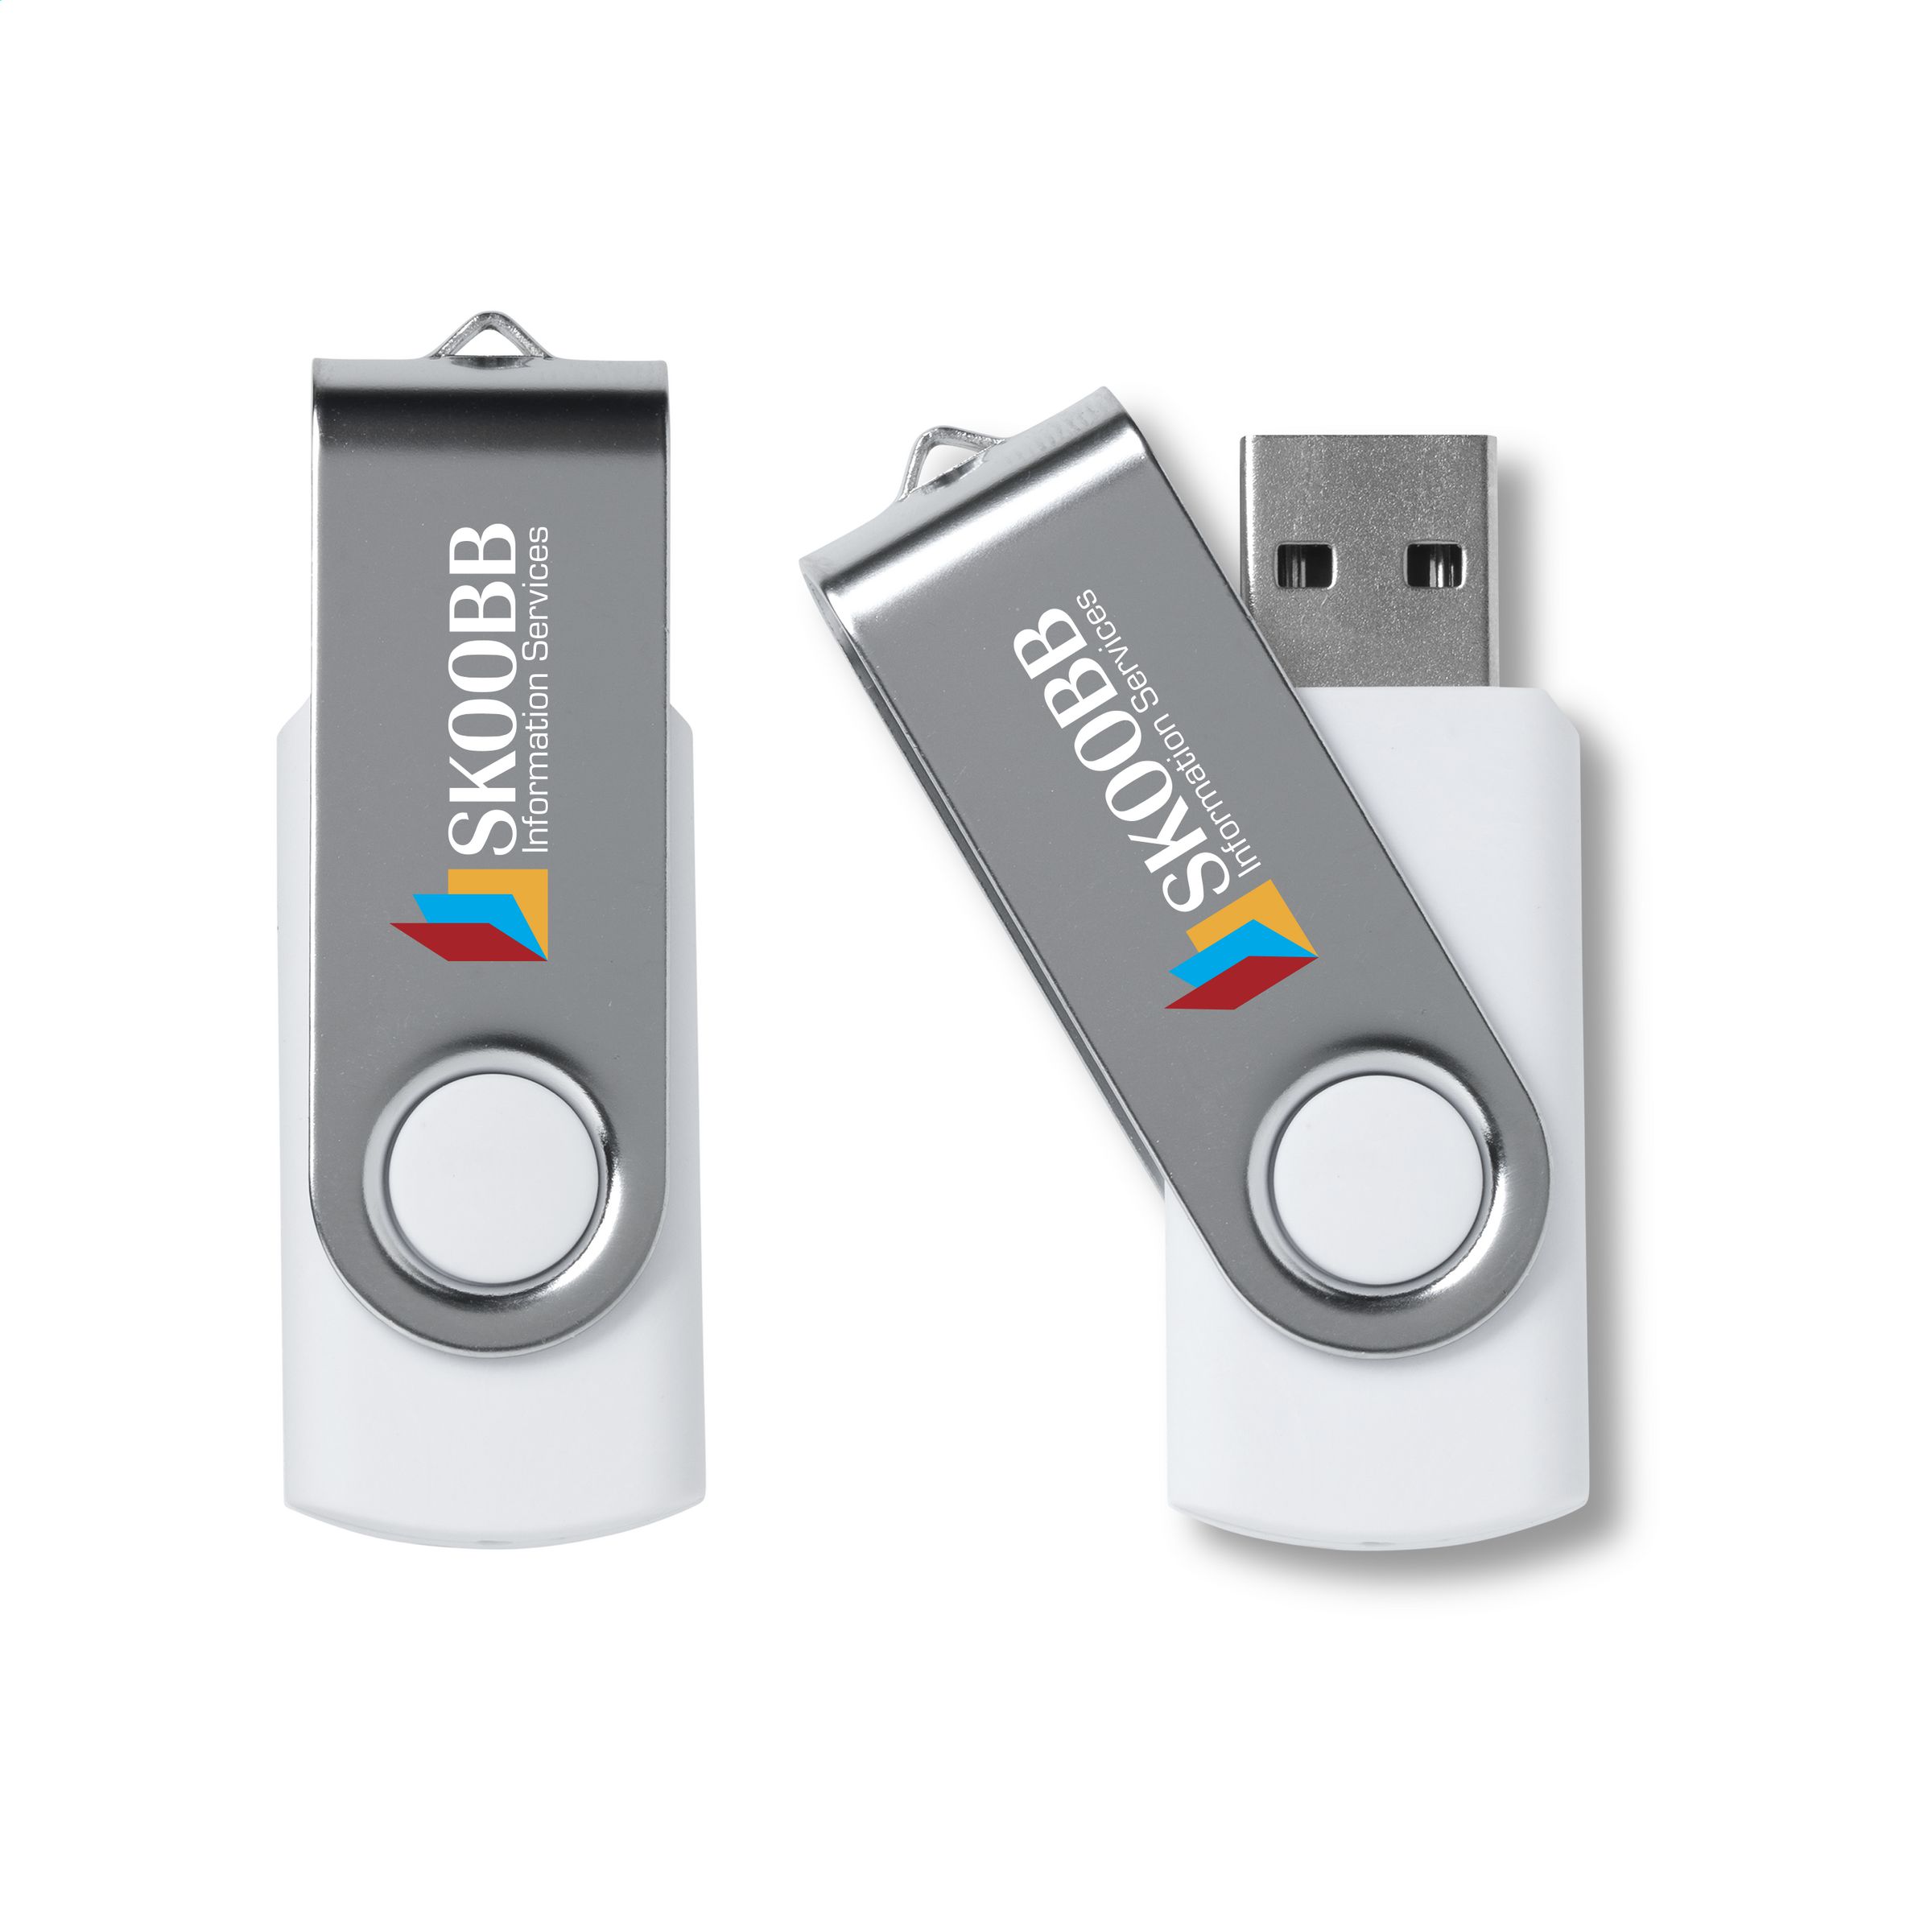 StorageMate USB 2.0 - High Wycombe - Cànoves i Samalús